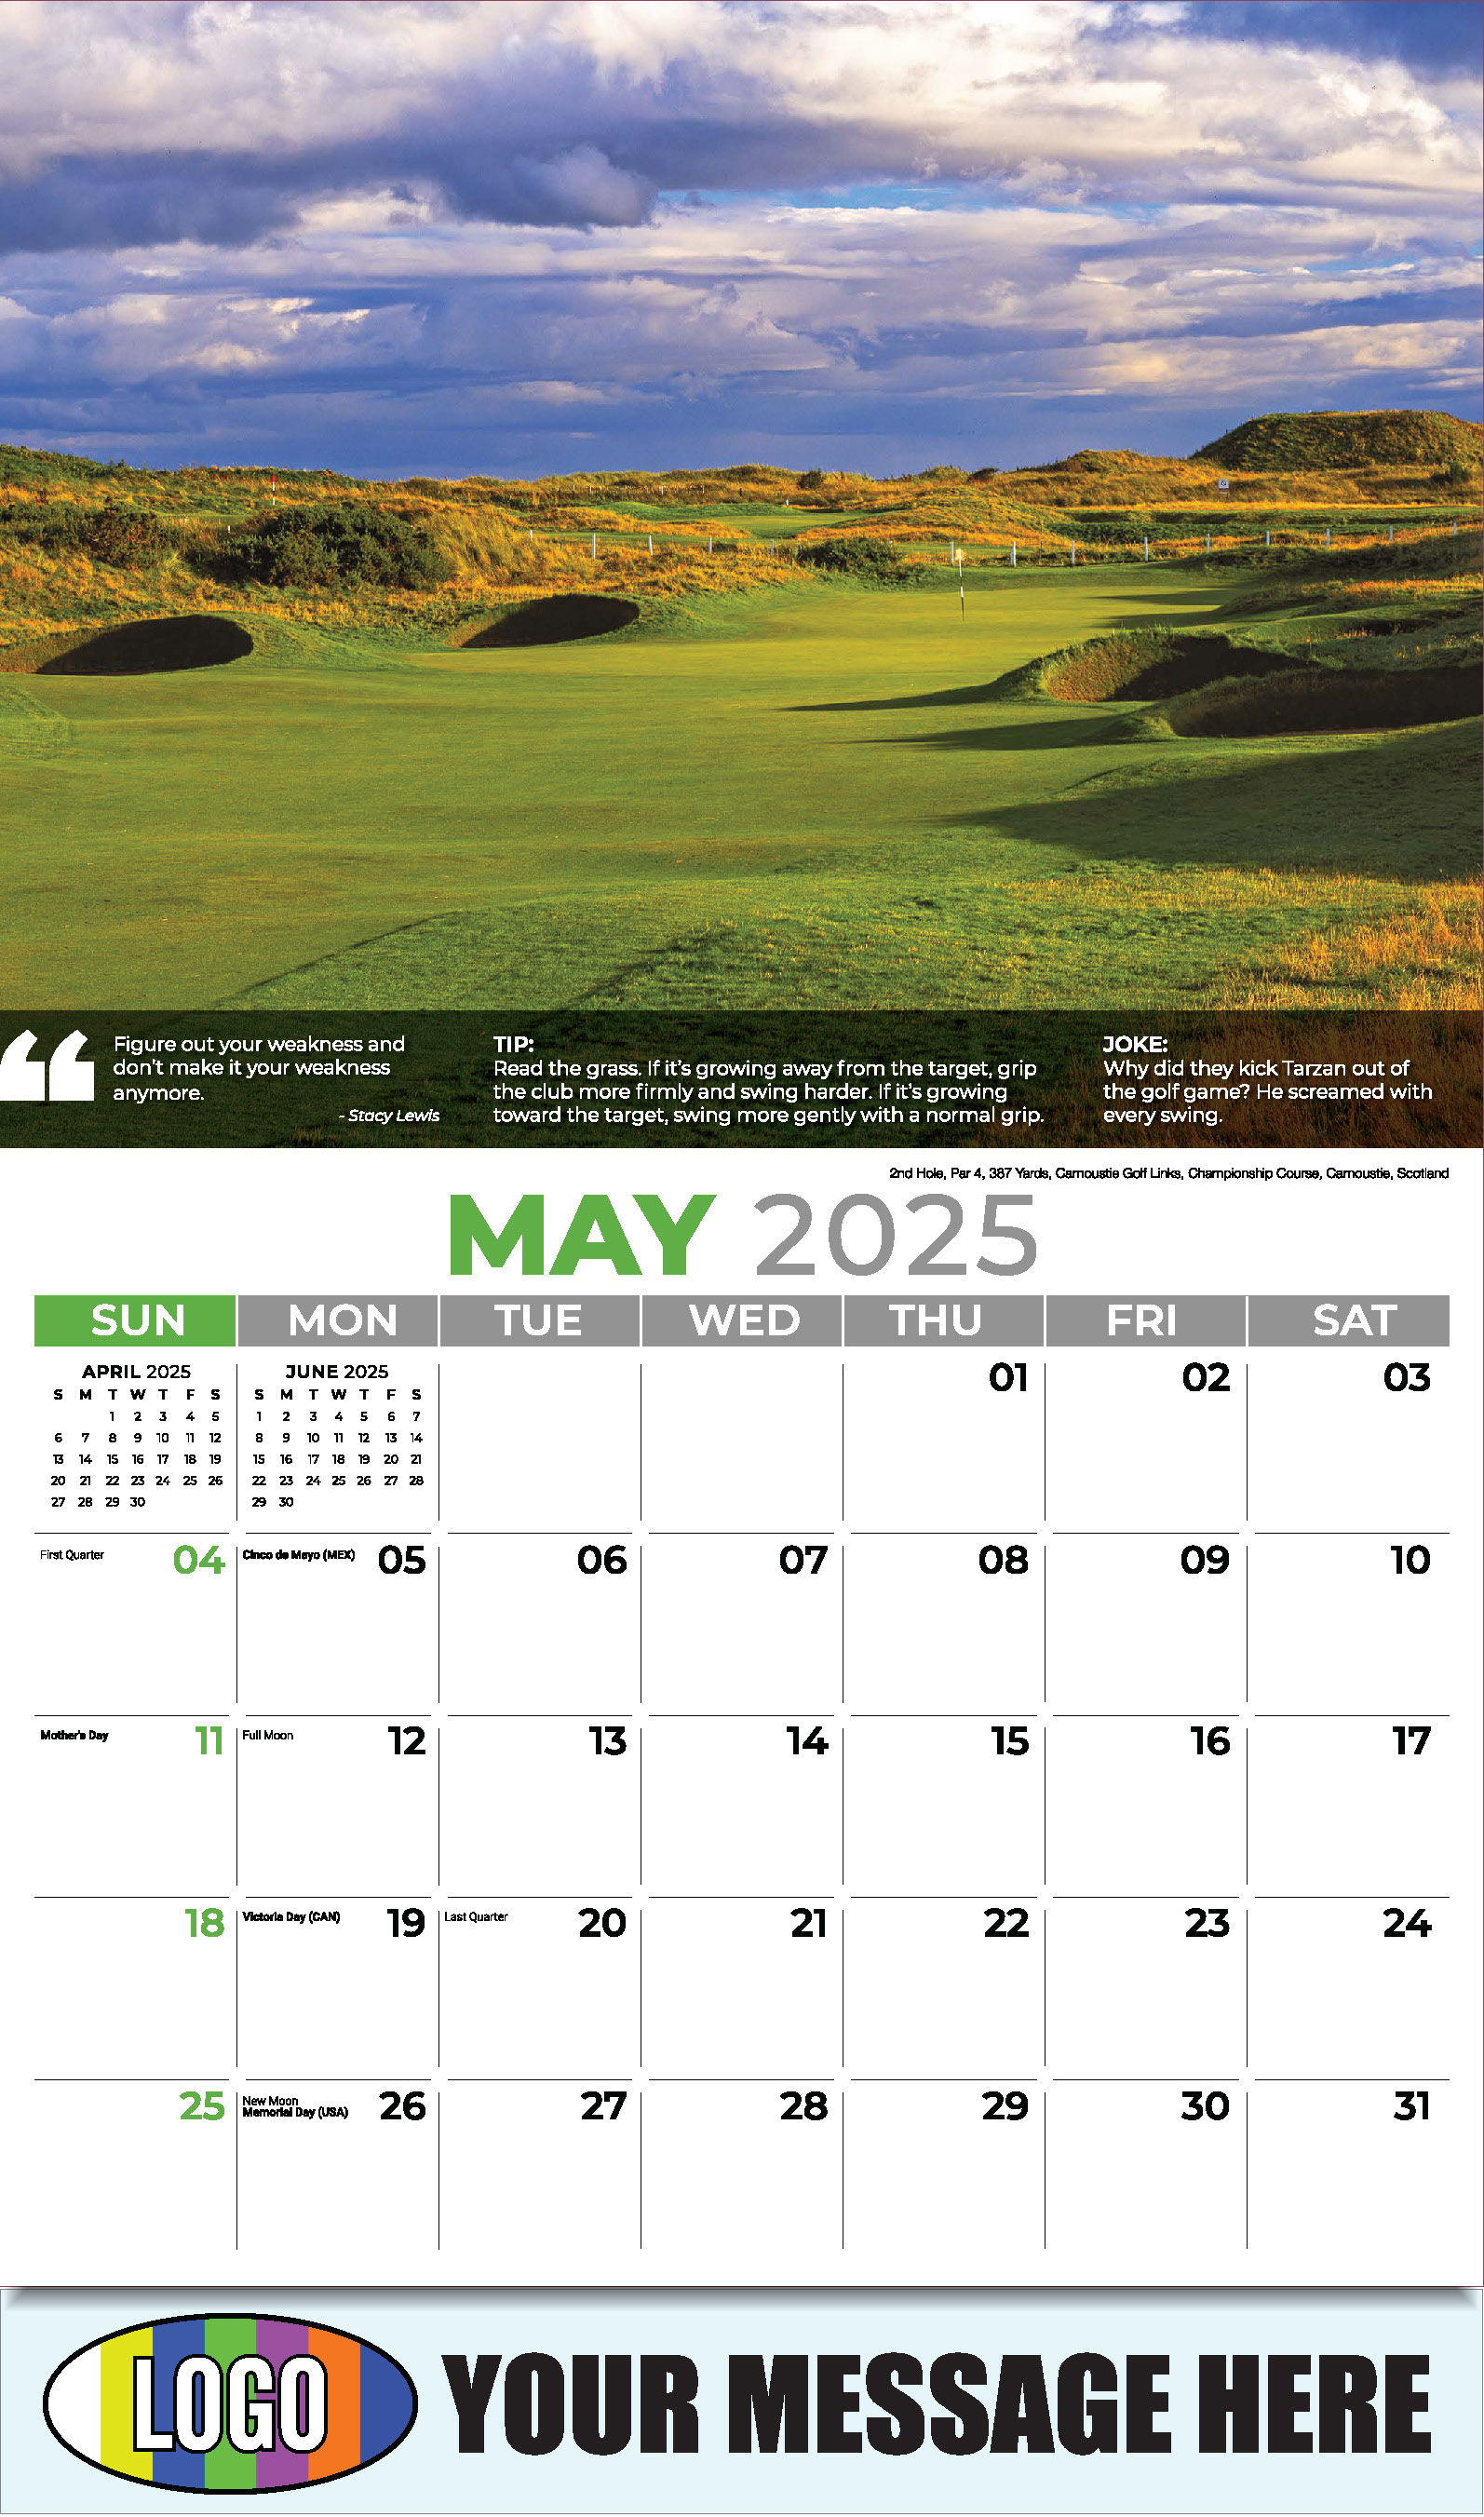 Golf Tips 2025 Business Promo Calendar - May